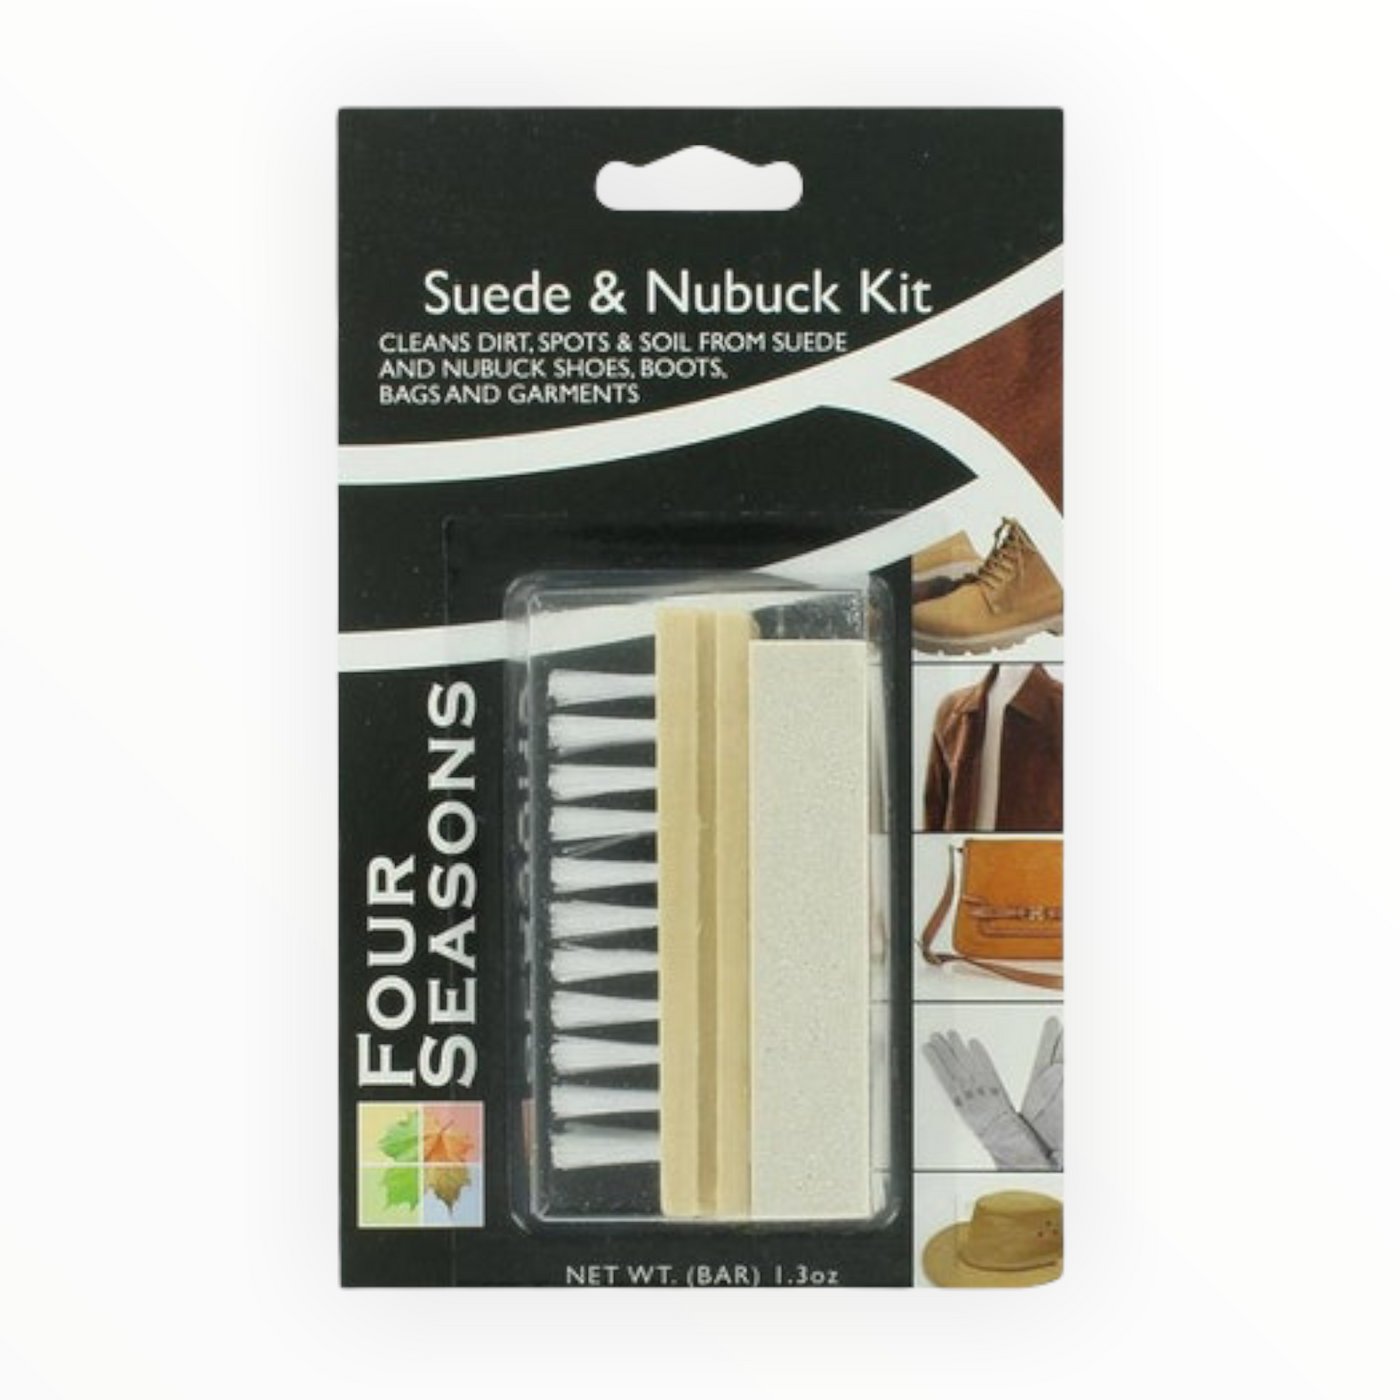 Suede & Nubuck Kit